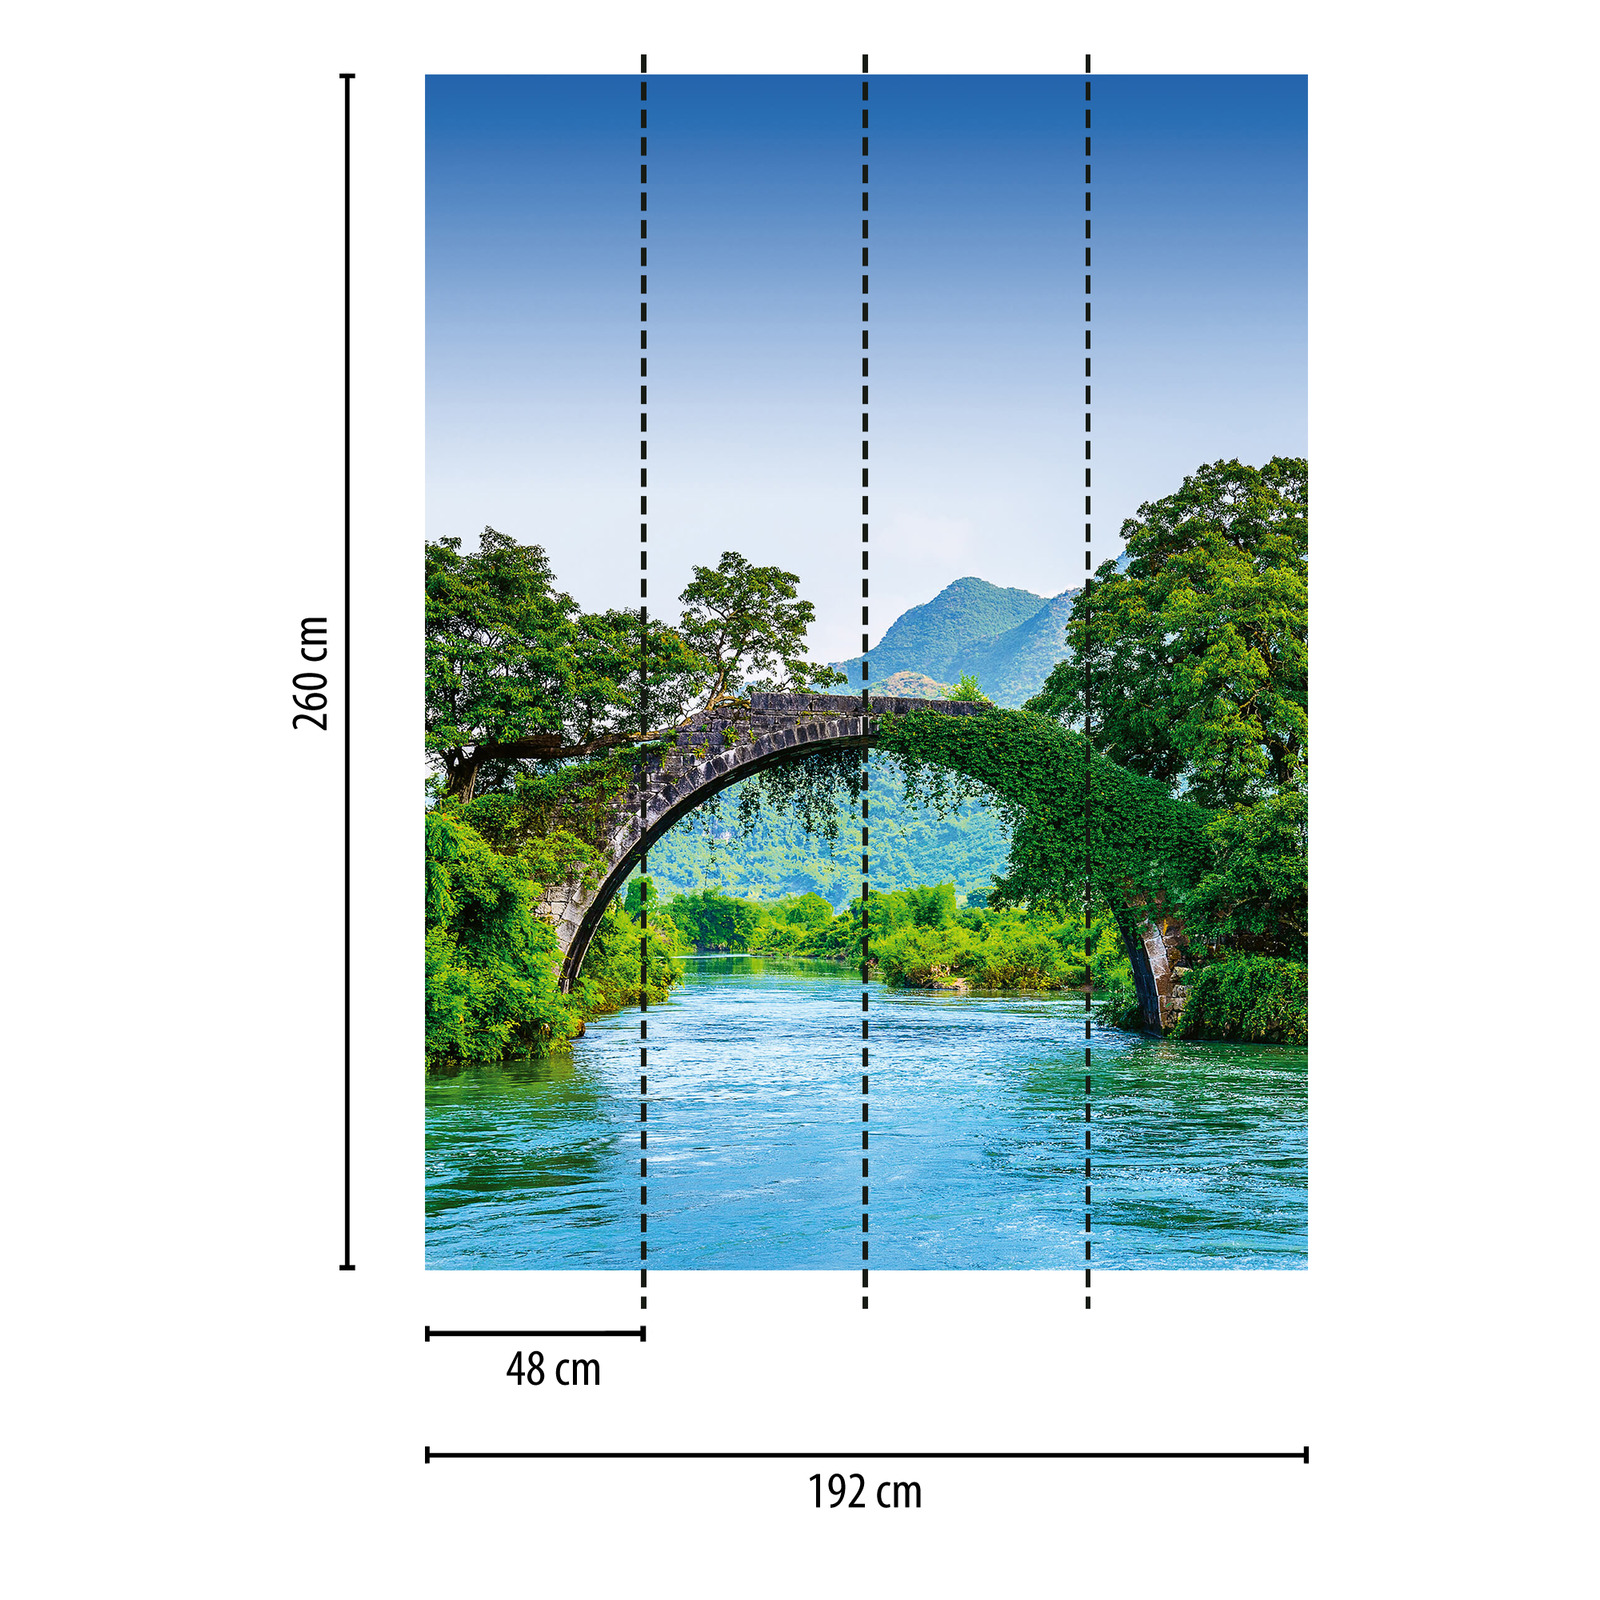             Photo wallpaper asian river landscape with bridge
        